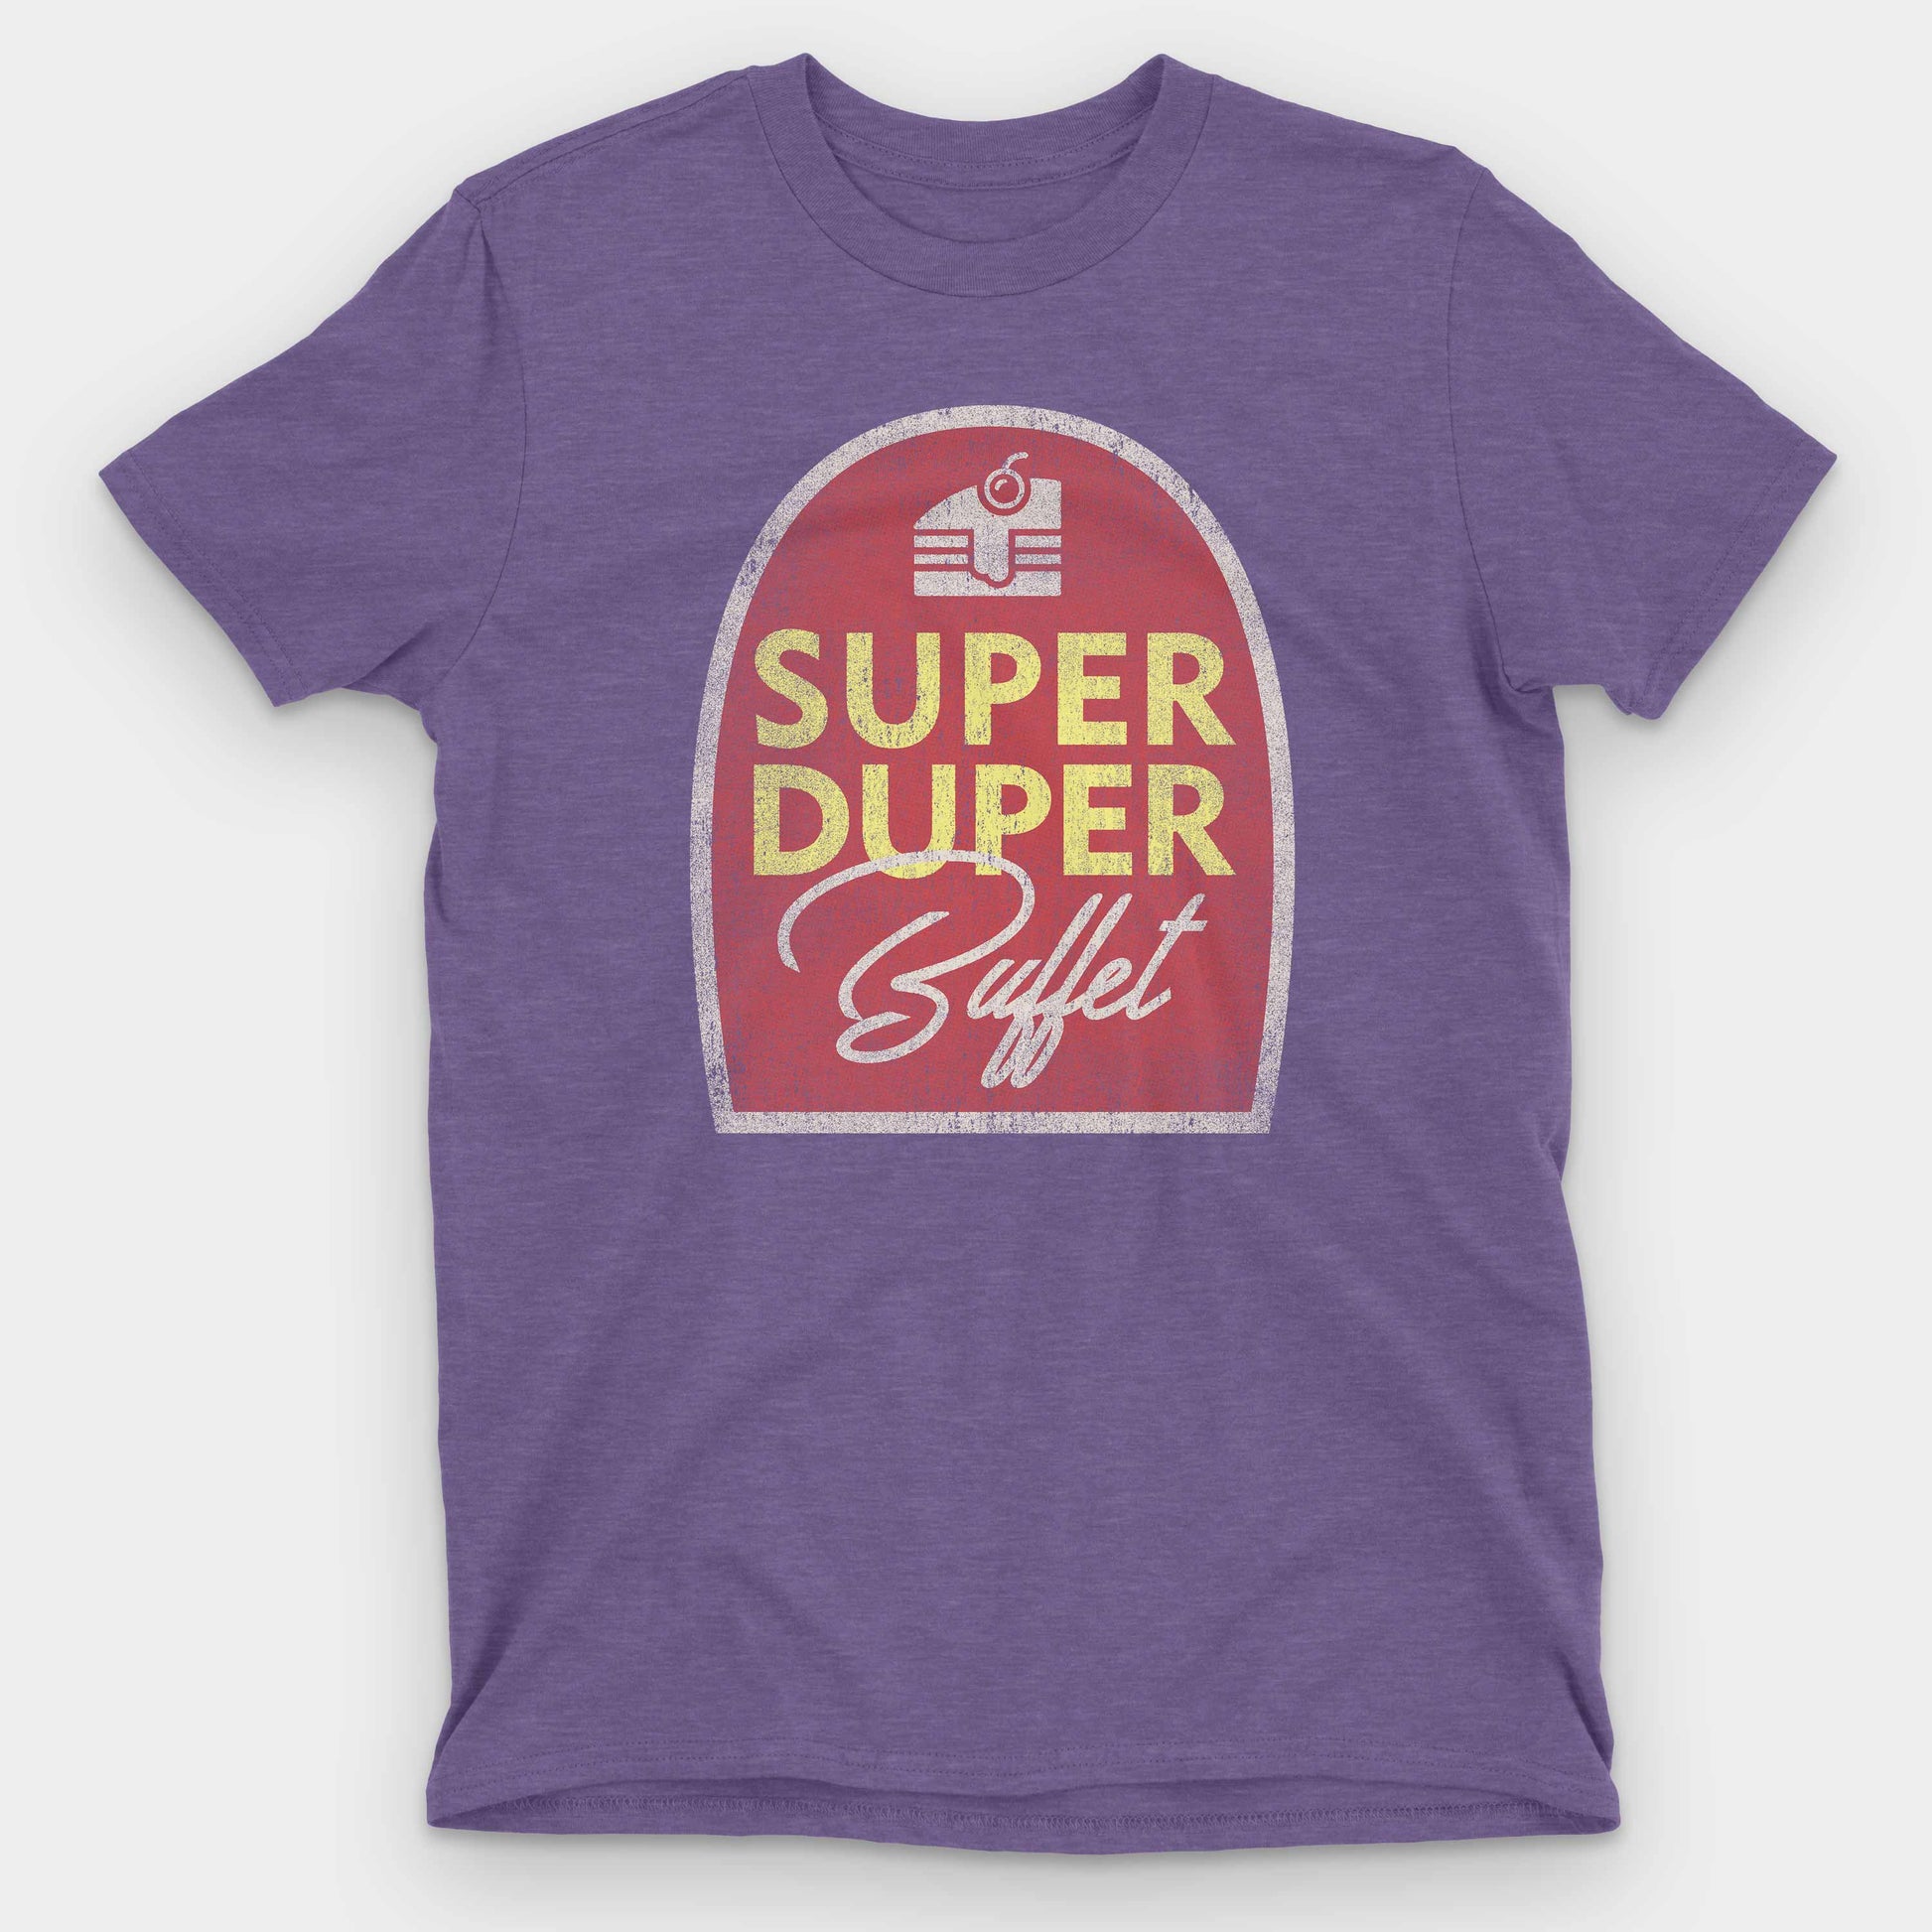 Heather Purple Super Duper Buffet Graphic T-Shirt by Snaxtime